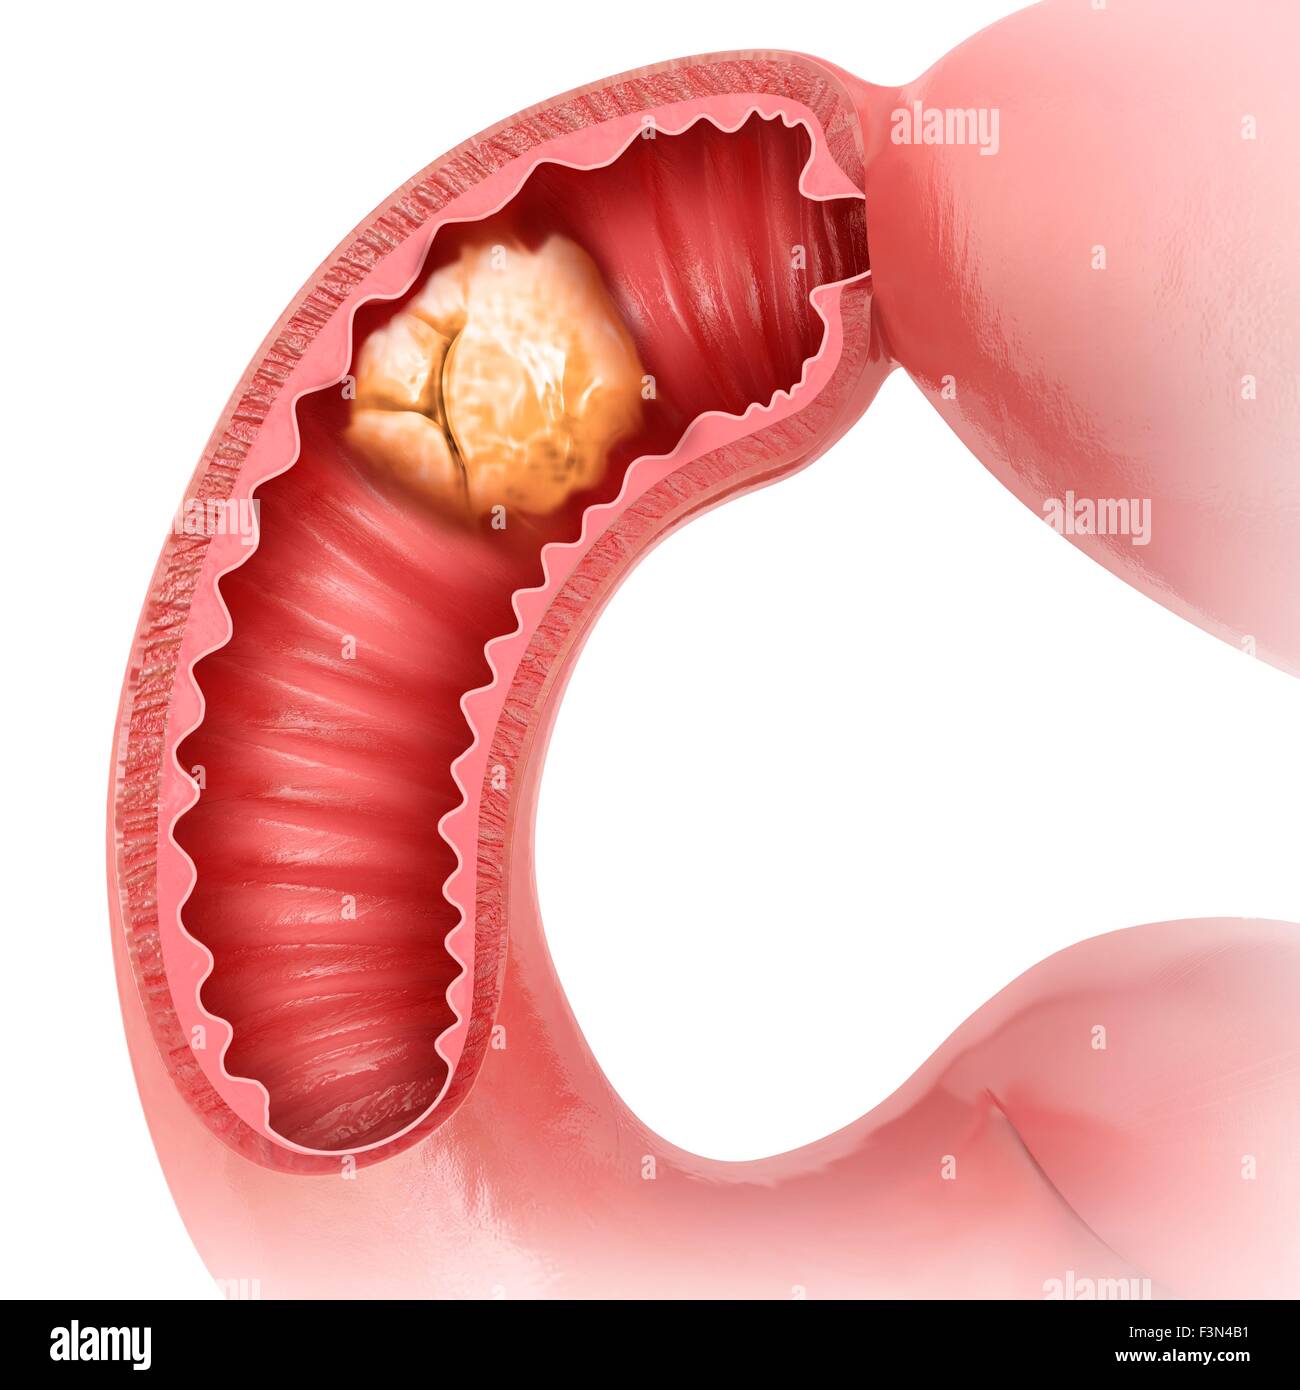 Small intestine with tumor, illustration Stock Photo